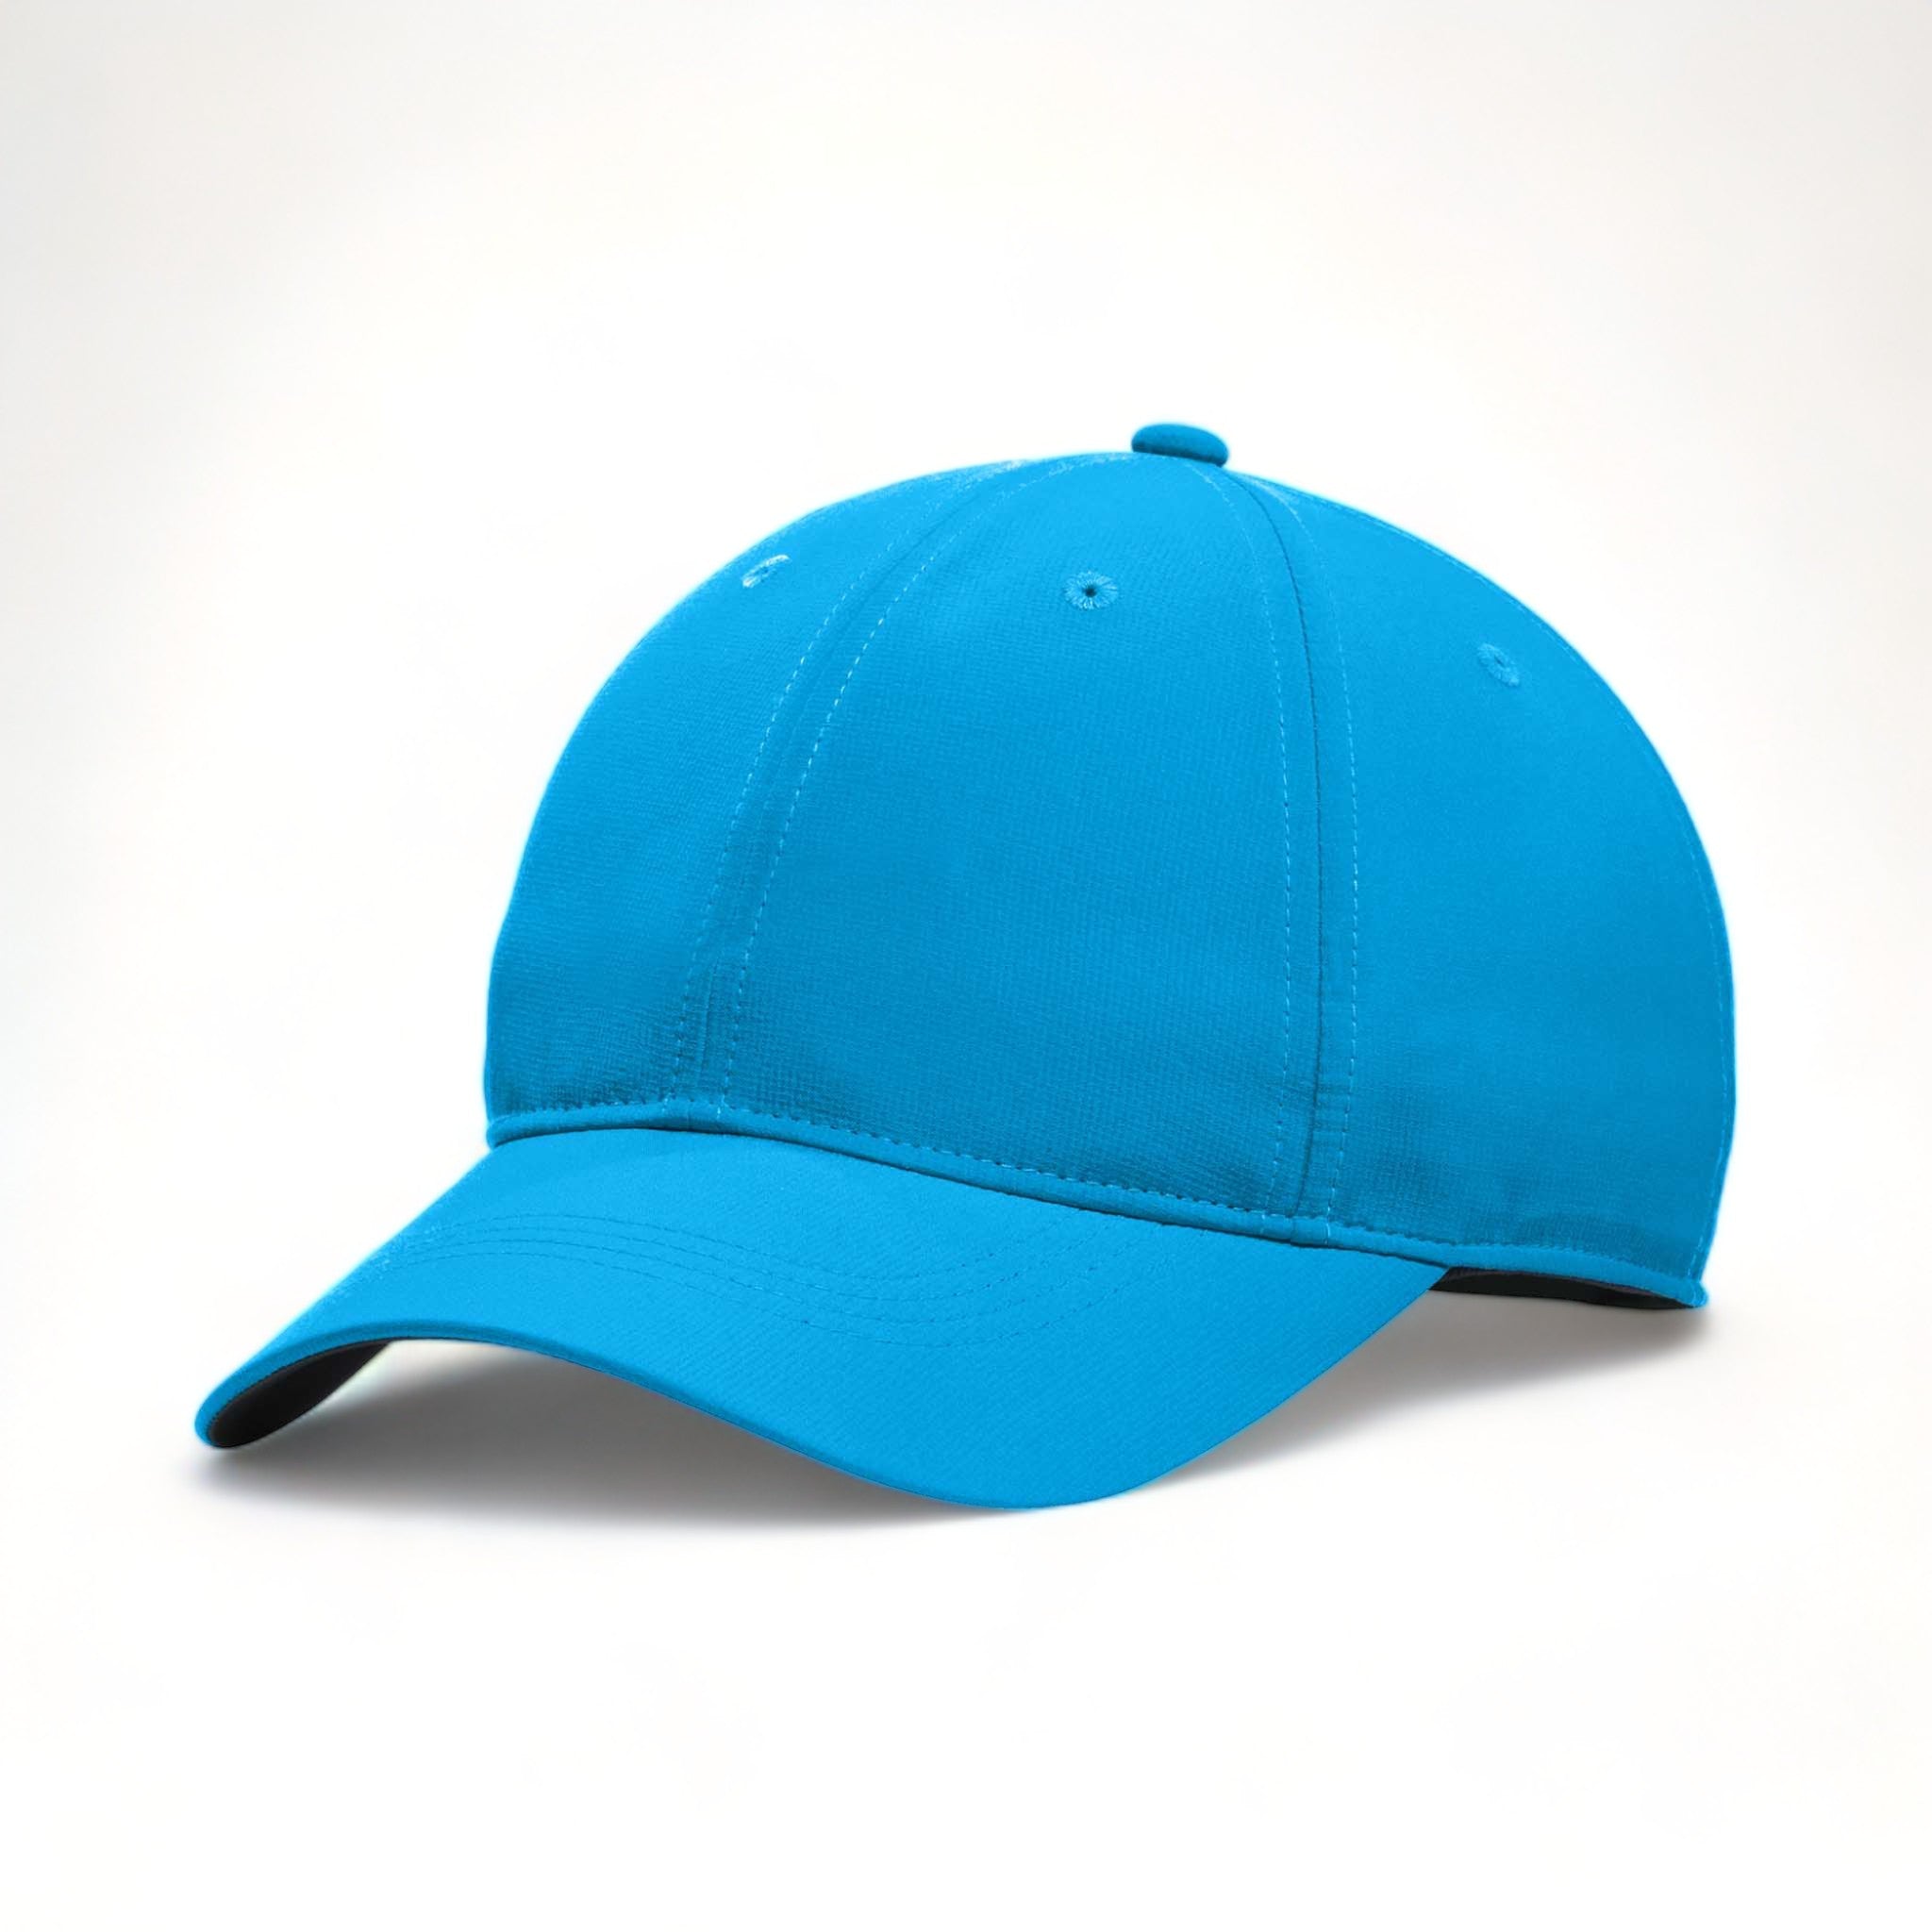 Side view of Nike NKFB6444 custom hat in photo blue